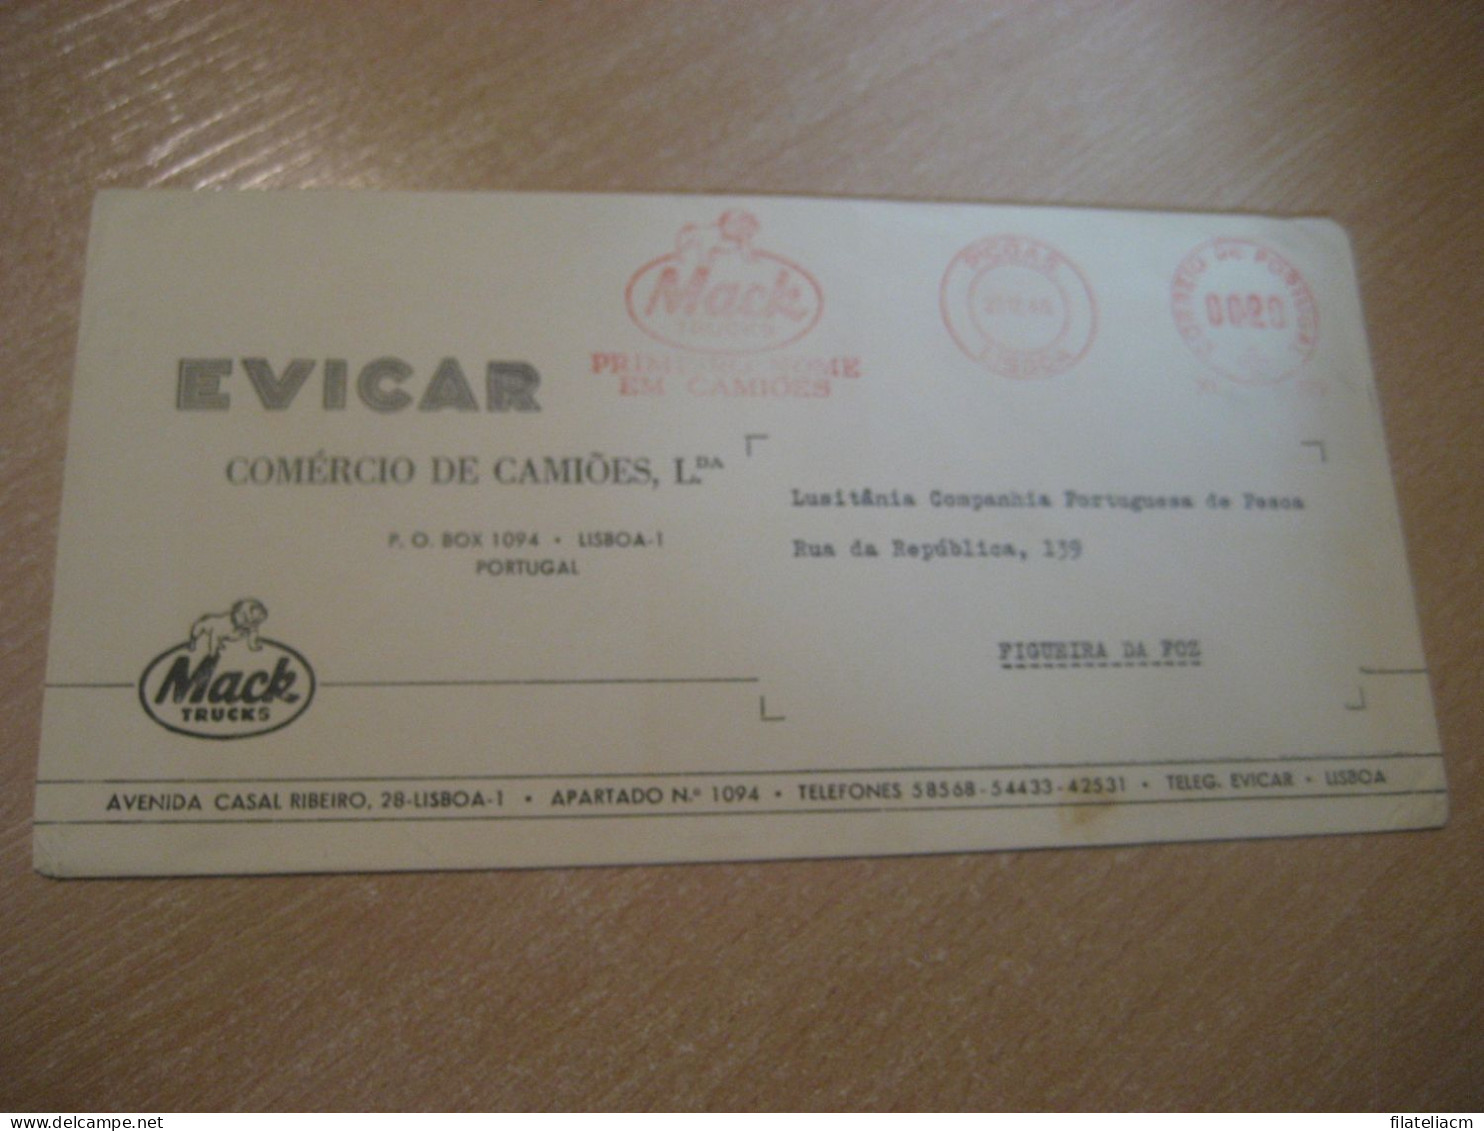 LISBOA 1965 To Figueira Da Foz EVICAR Mack Trucks Truck Dog Meter Mail Cancel Cover PORTUGAL - Briefe U. Dokumente